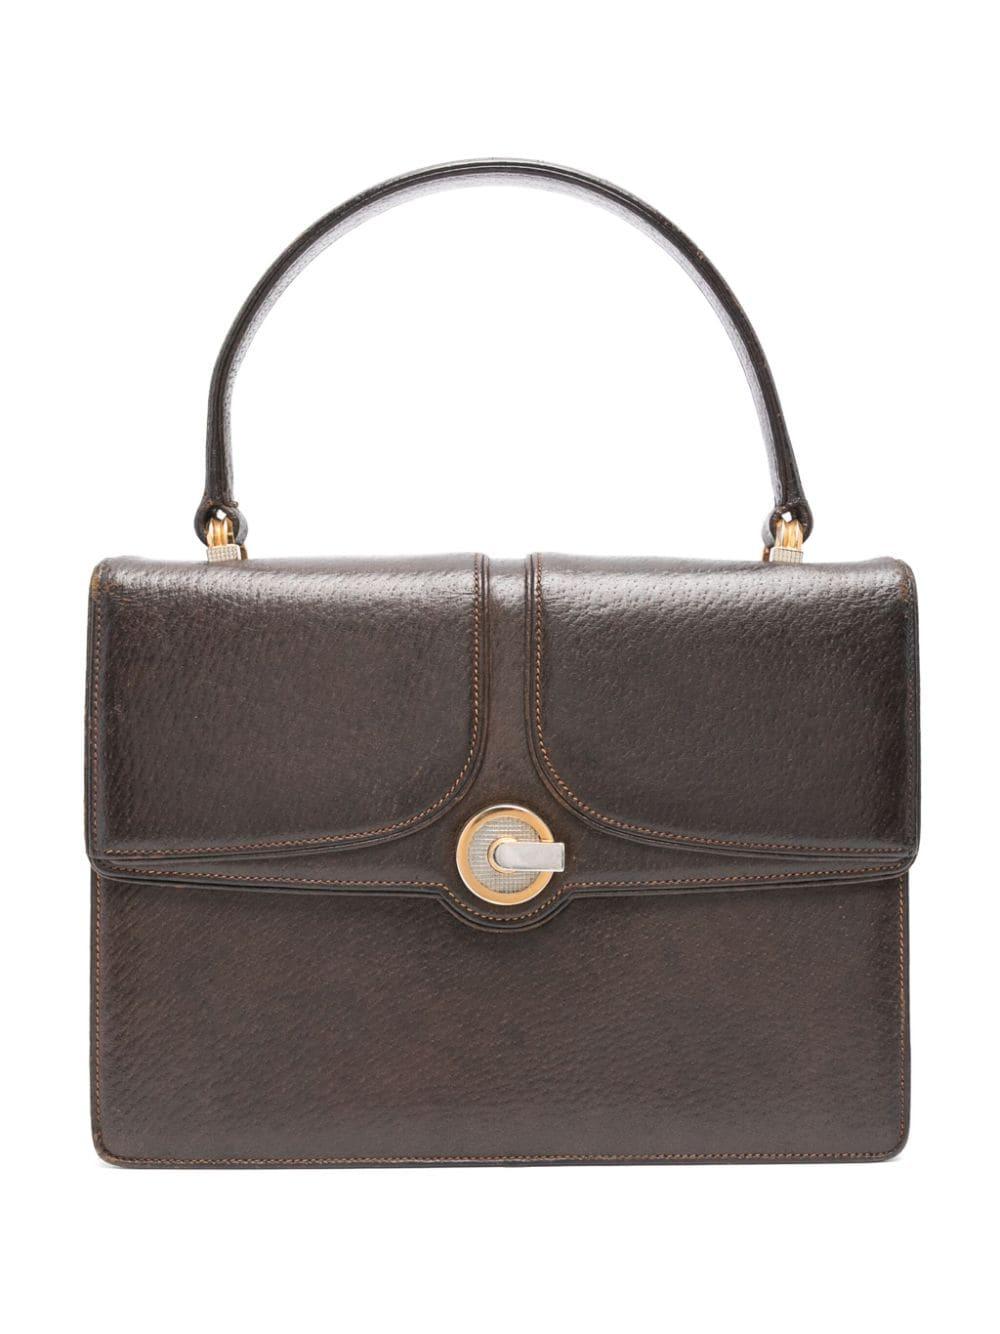 1950s Gucci Brown Leather Handbag For Sale 2